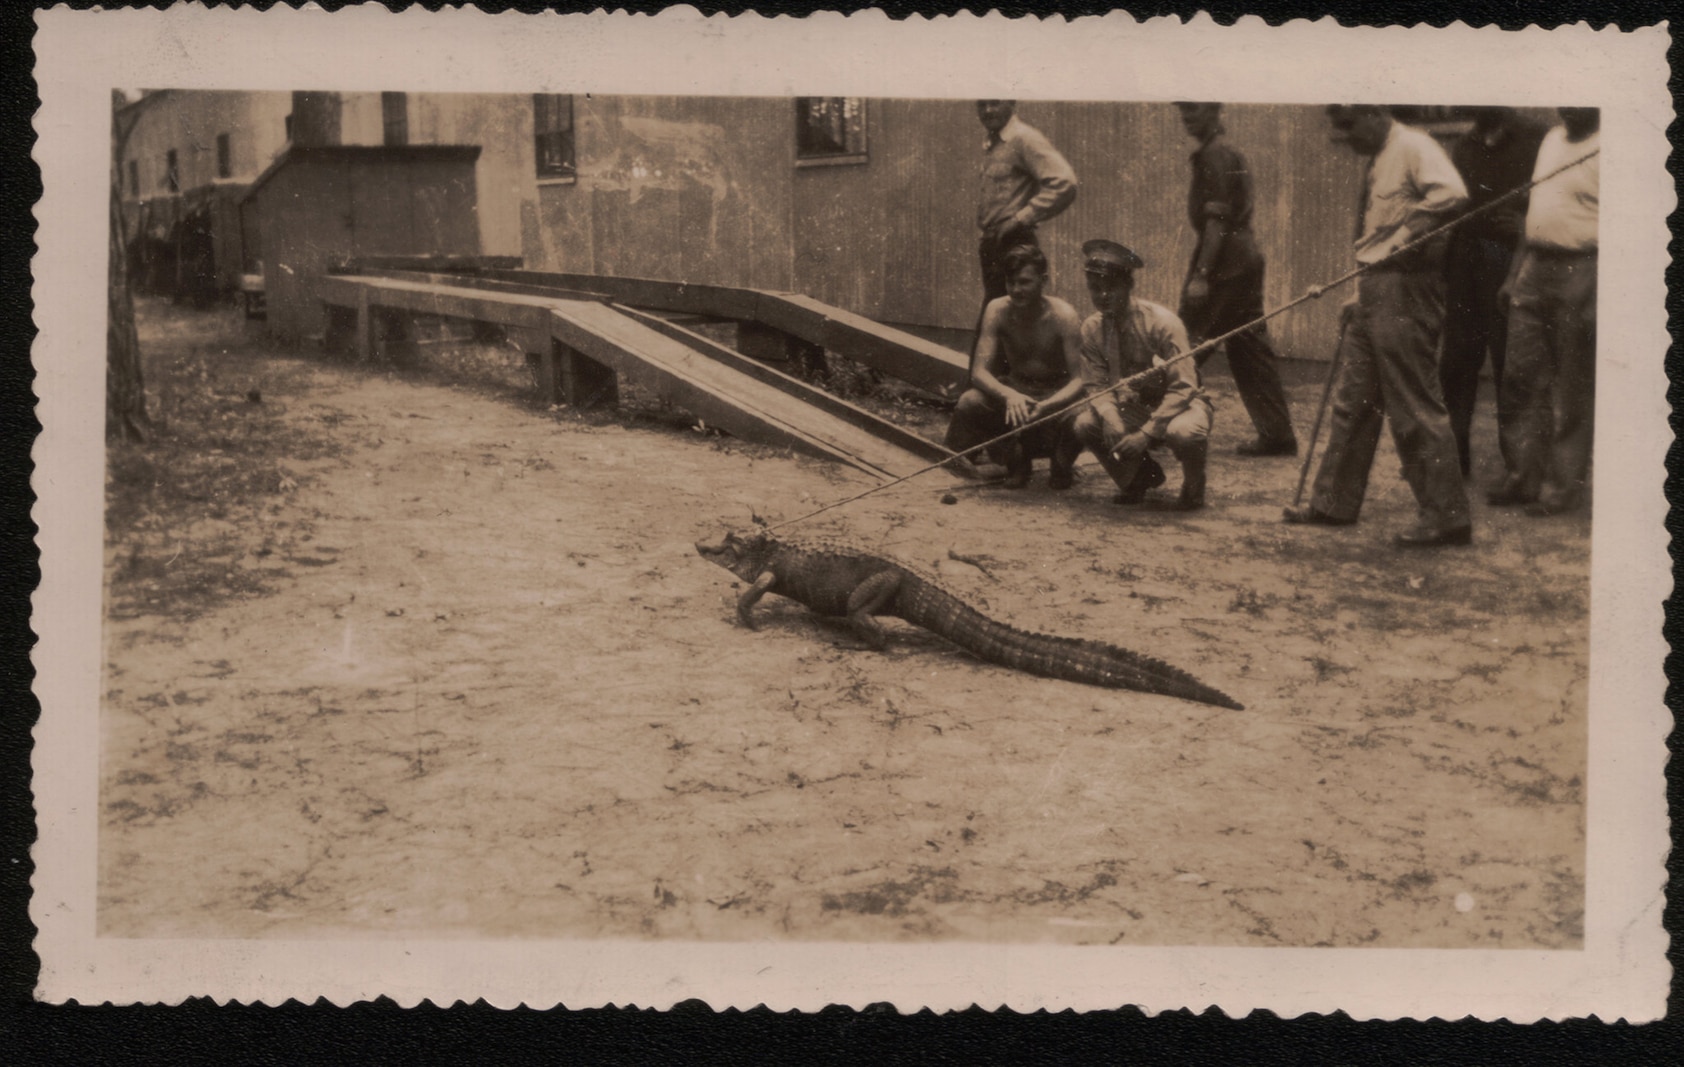 Alligator kept by World War II era Marines on Parris Island.